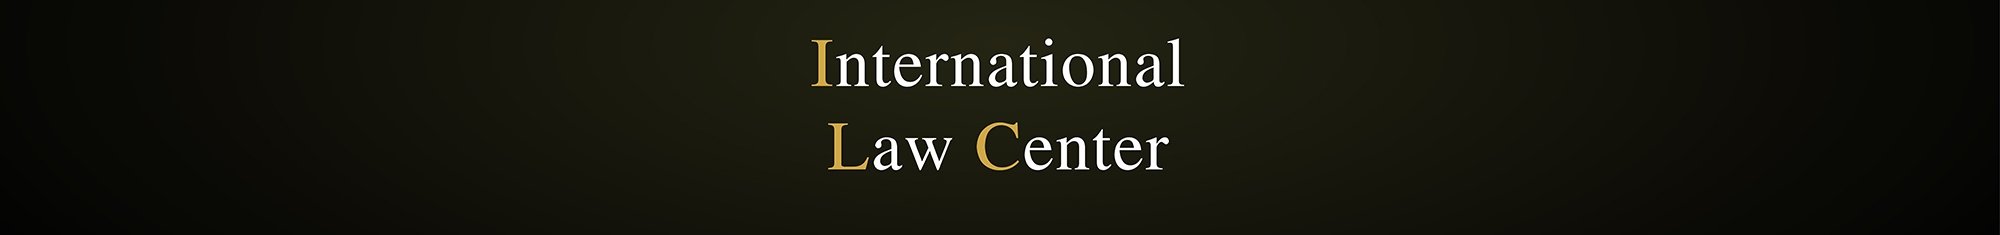 ILC - International Law Center cover photo